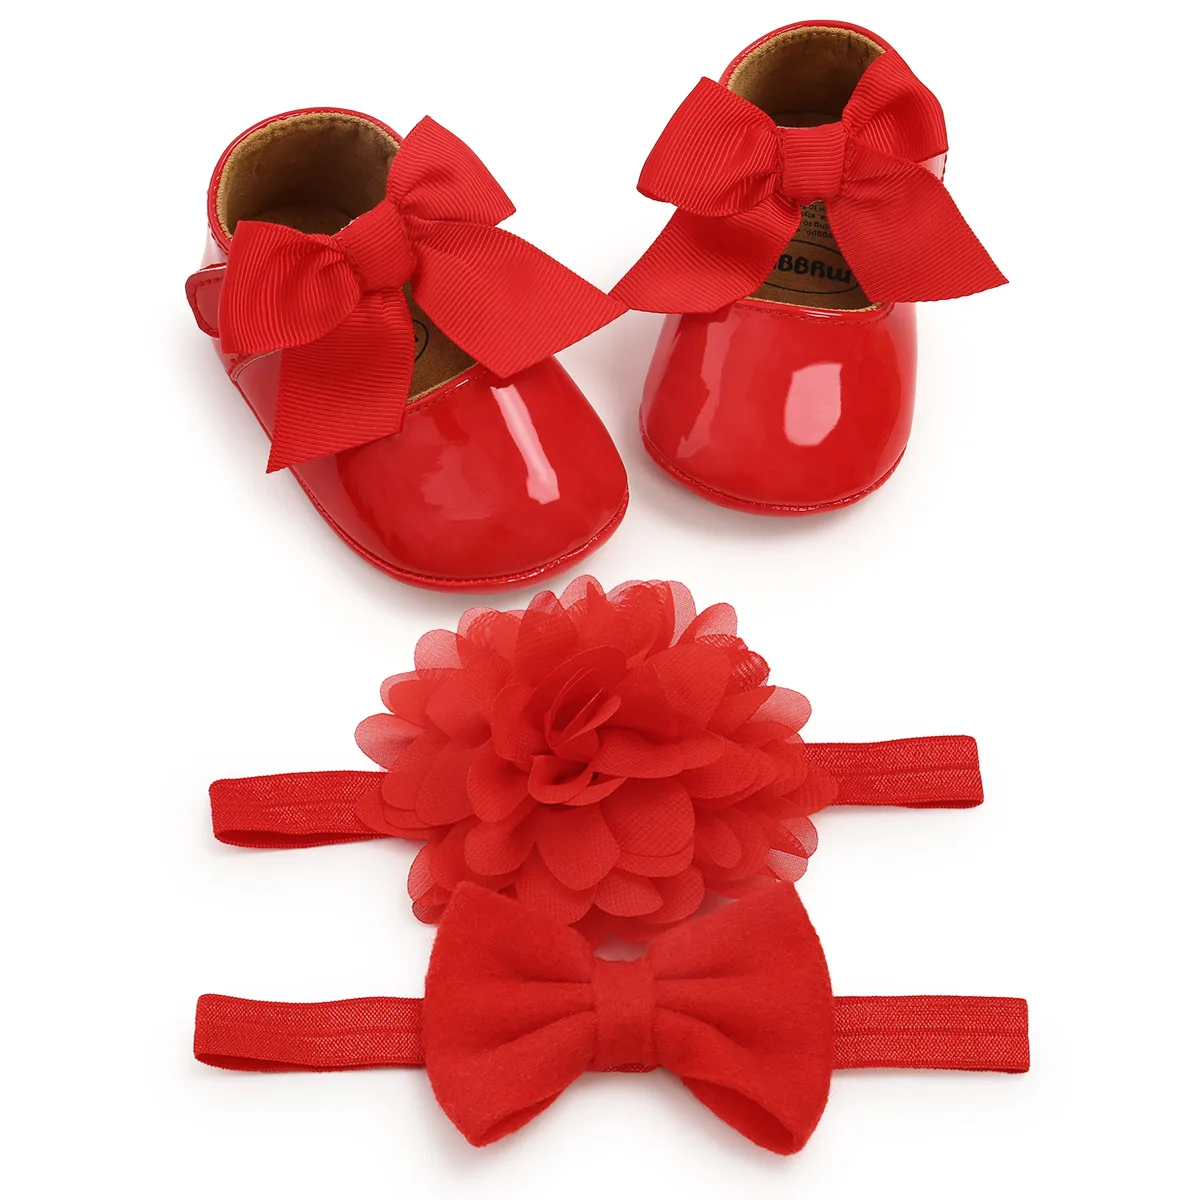 

Rubber sole Cute Bow Newborn Kids Girls First Walker Princess Baby Dress Shoes, 5 colors